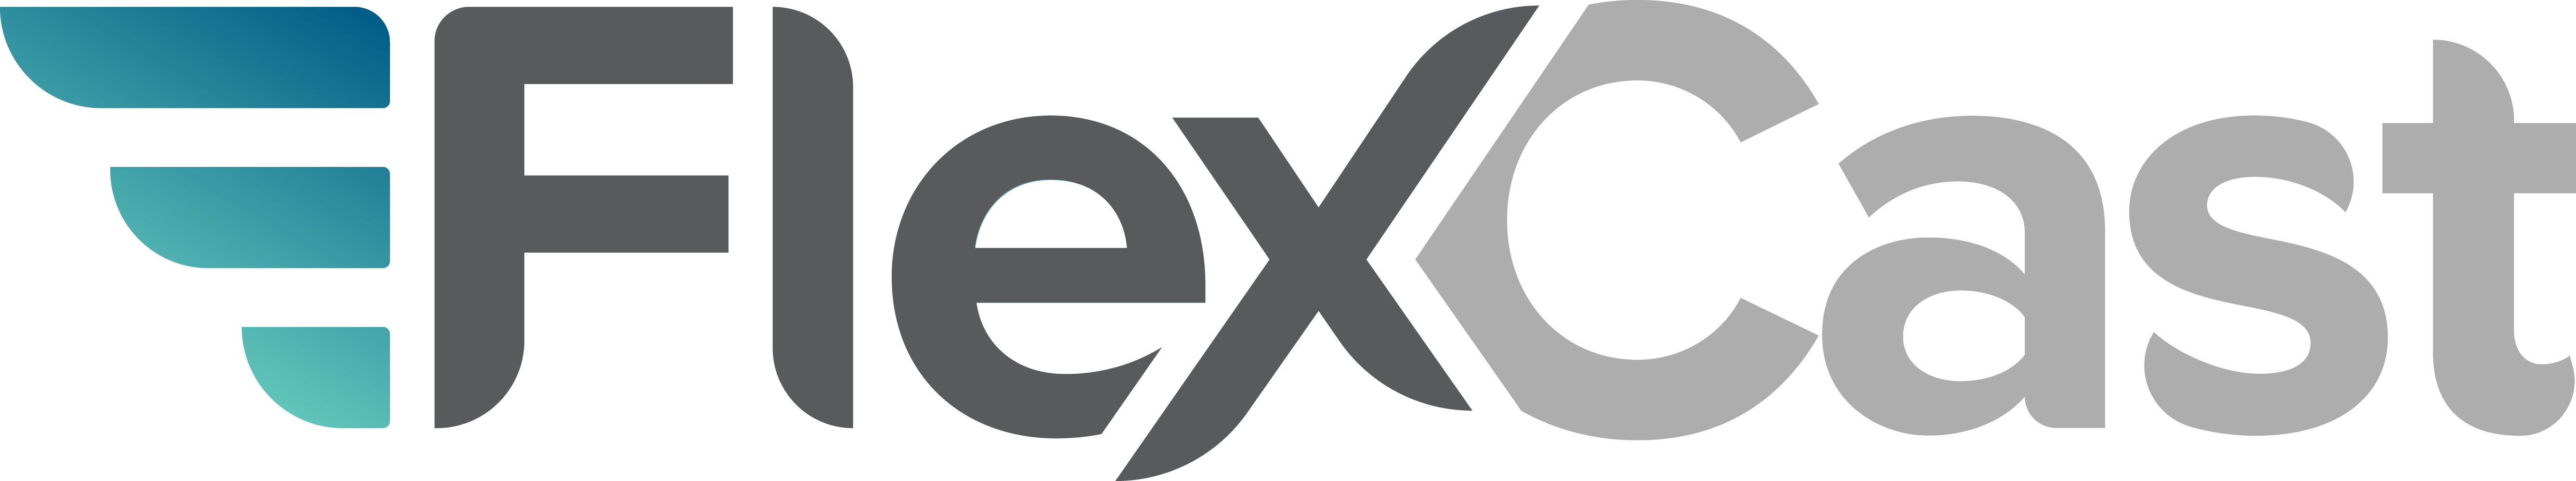 Flexcast_Logo